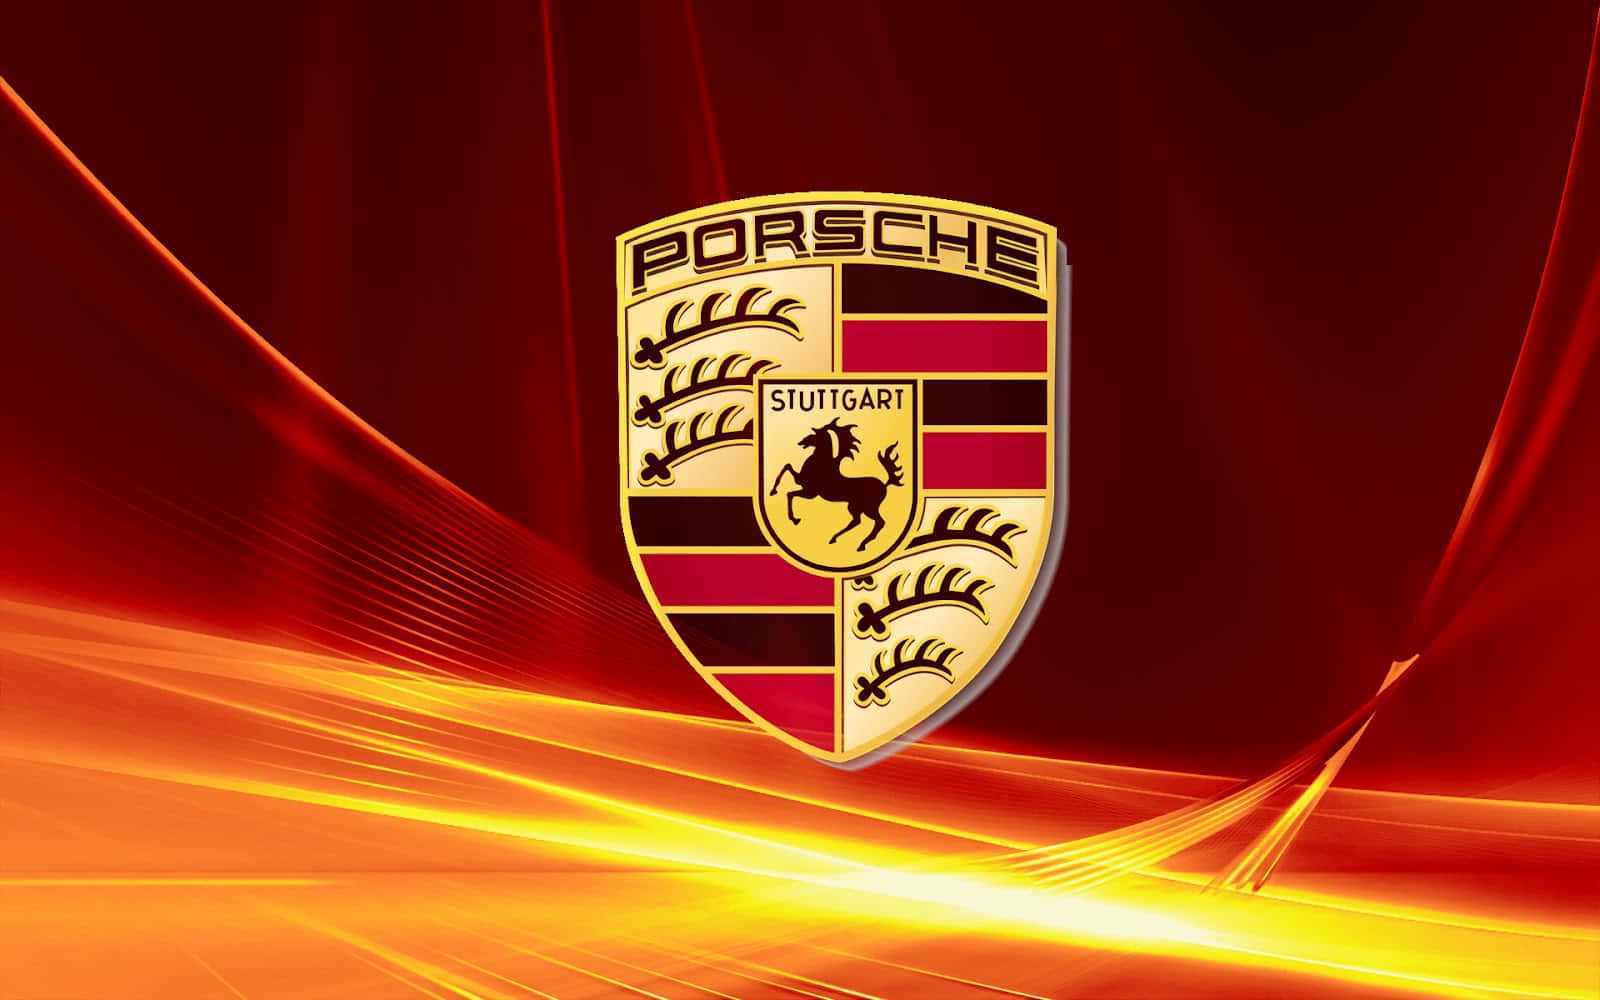 Porsche1600 X 1000 Baggrundsbillede.